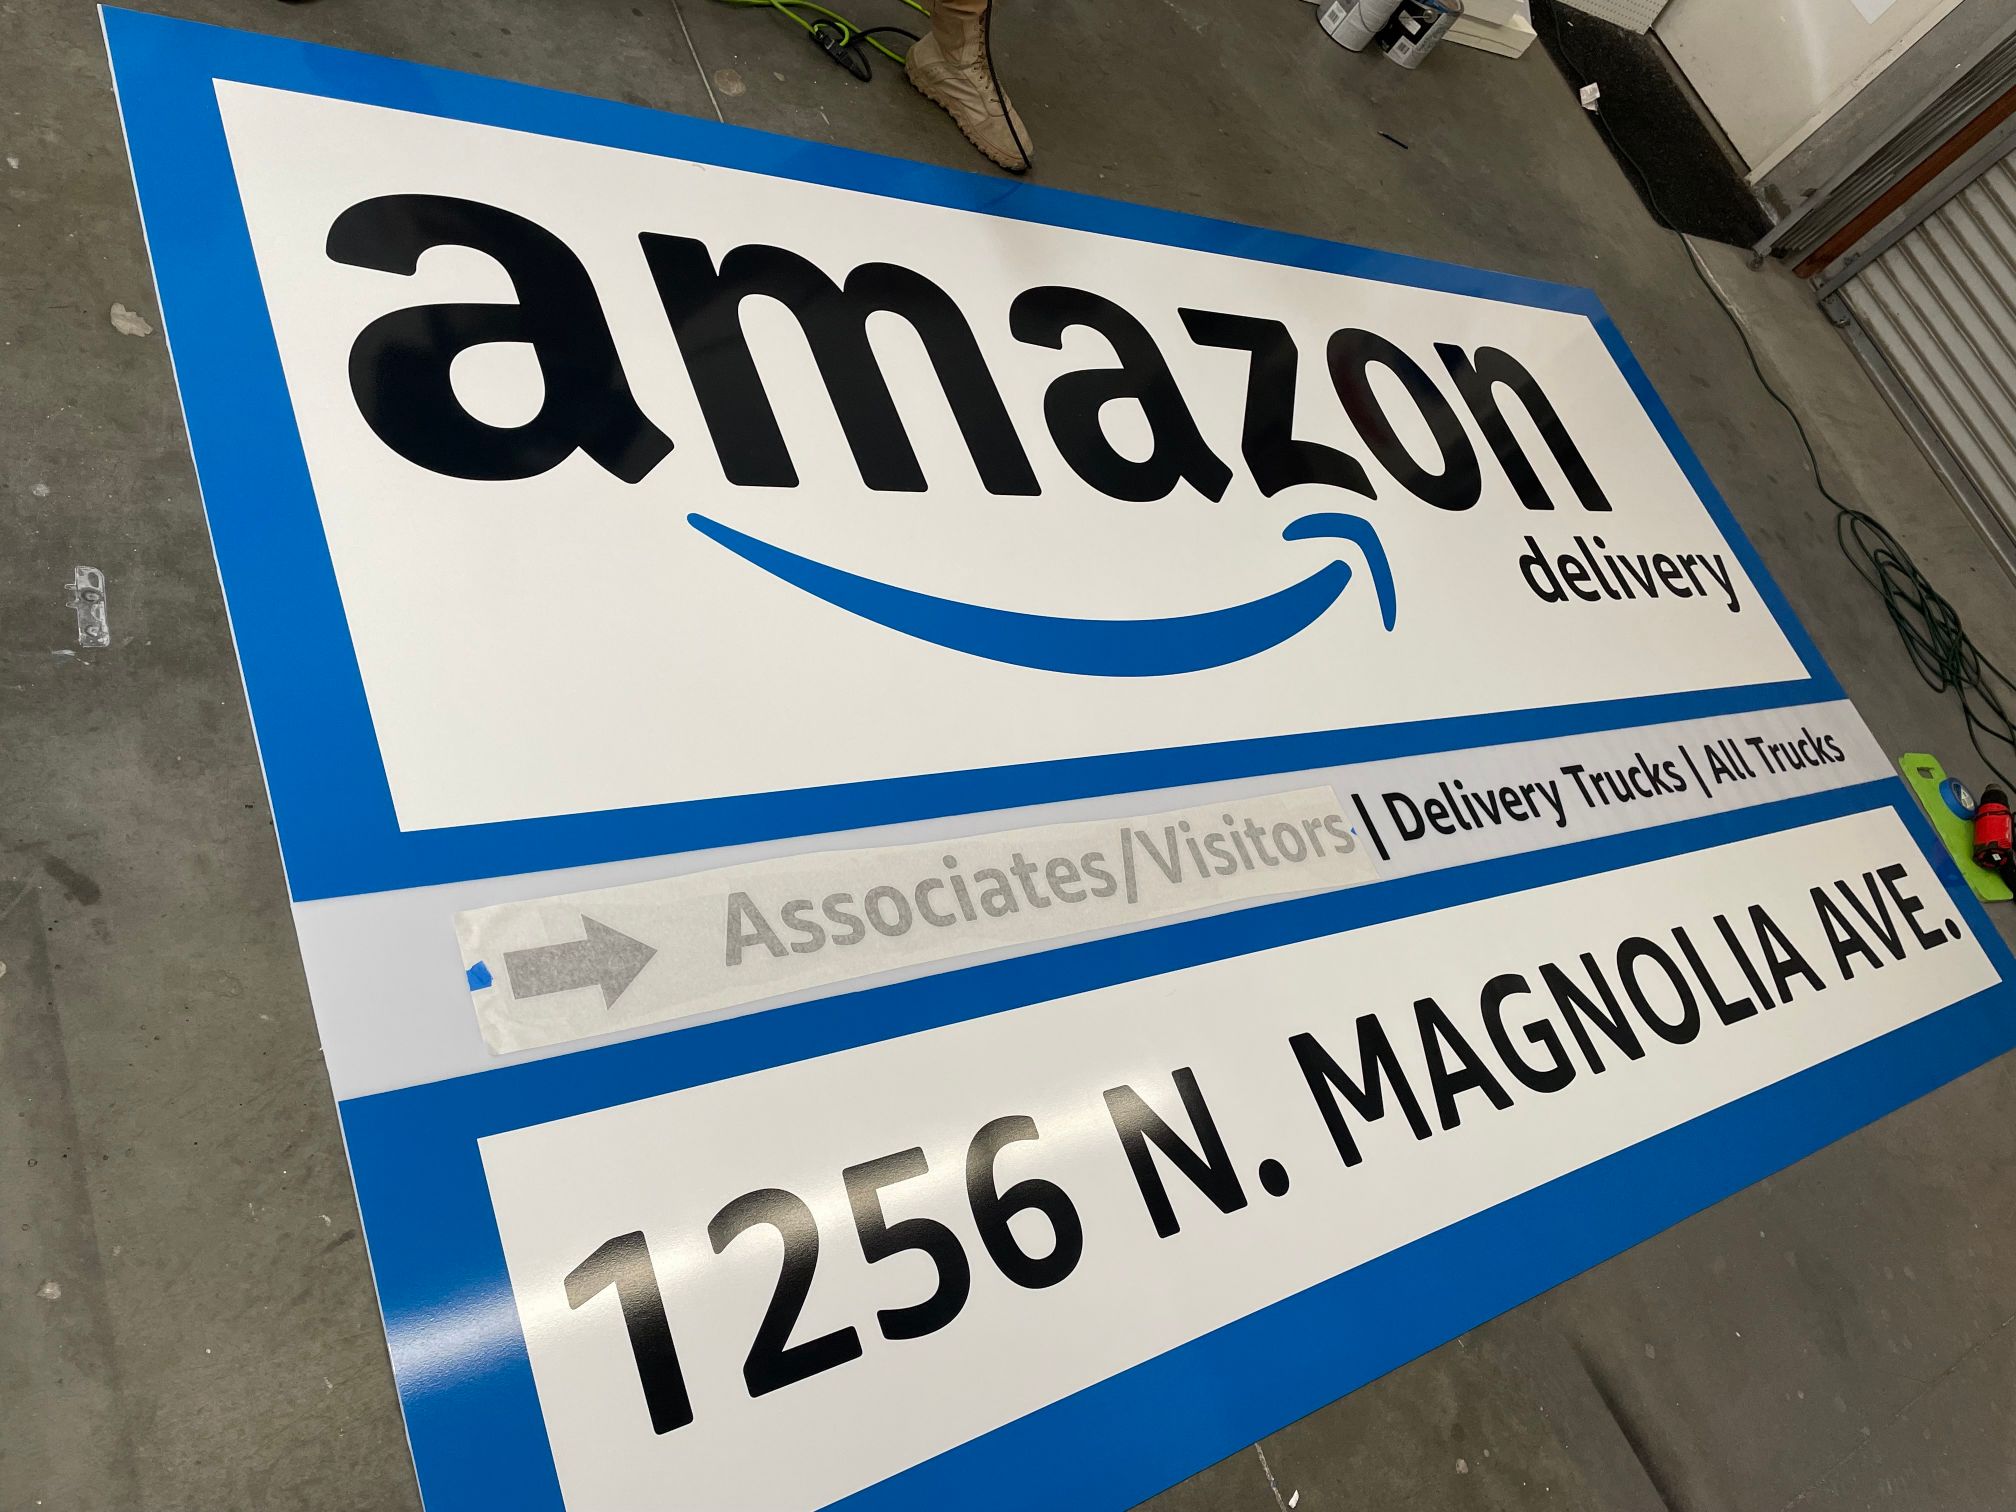 New Translucent Pylon Sign Faces Brand Amazon Facility in Anaheim CA